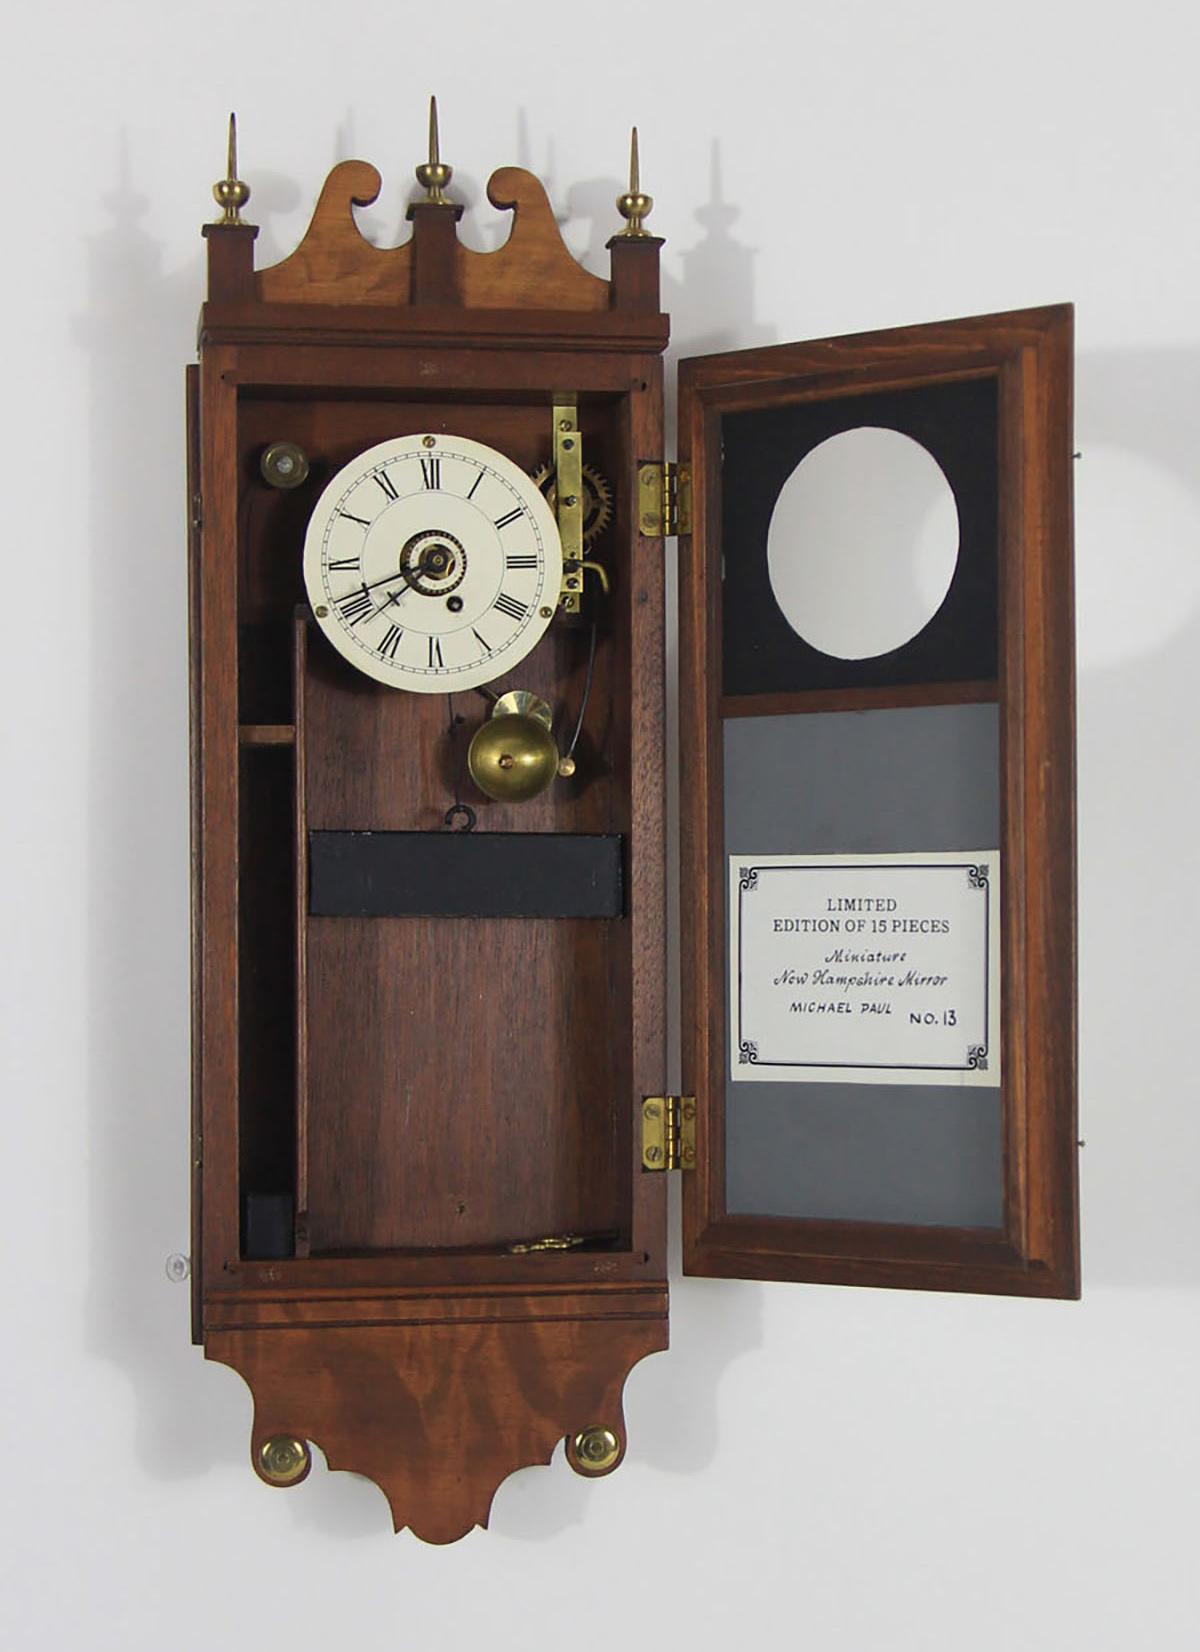 Michael Paul Miniature New Hampshire Time and Alarm Mirror Clock